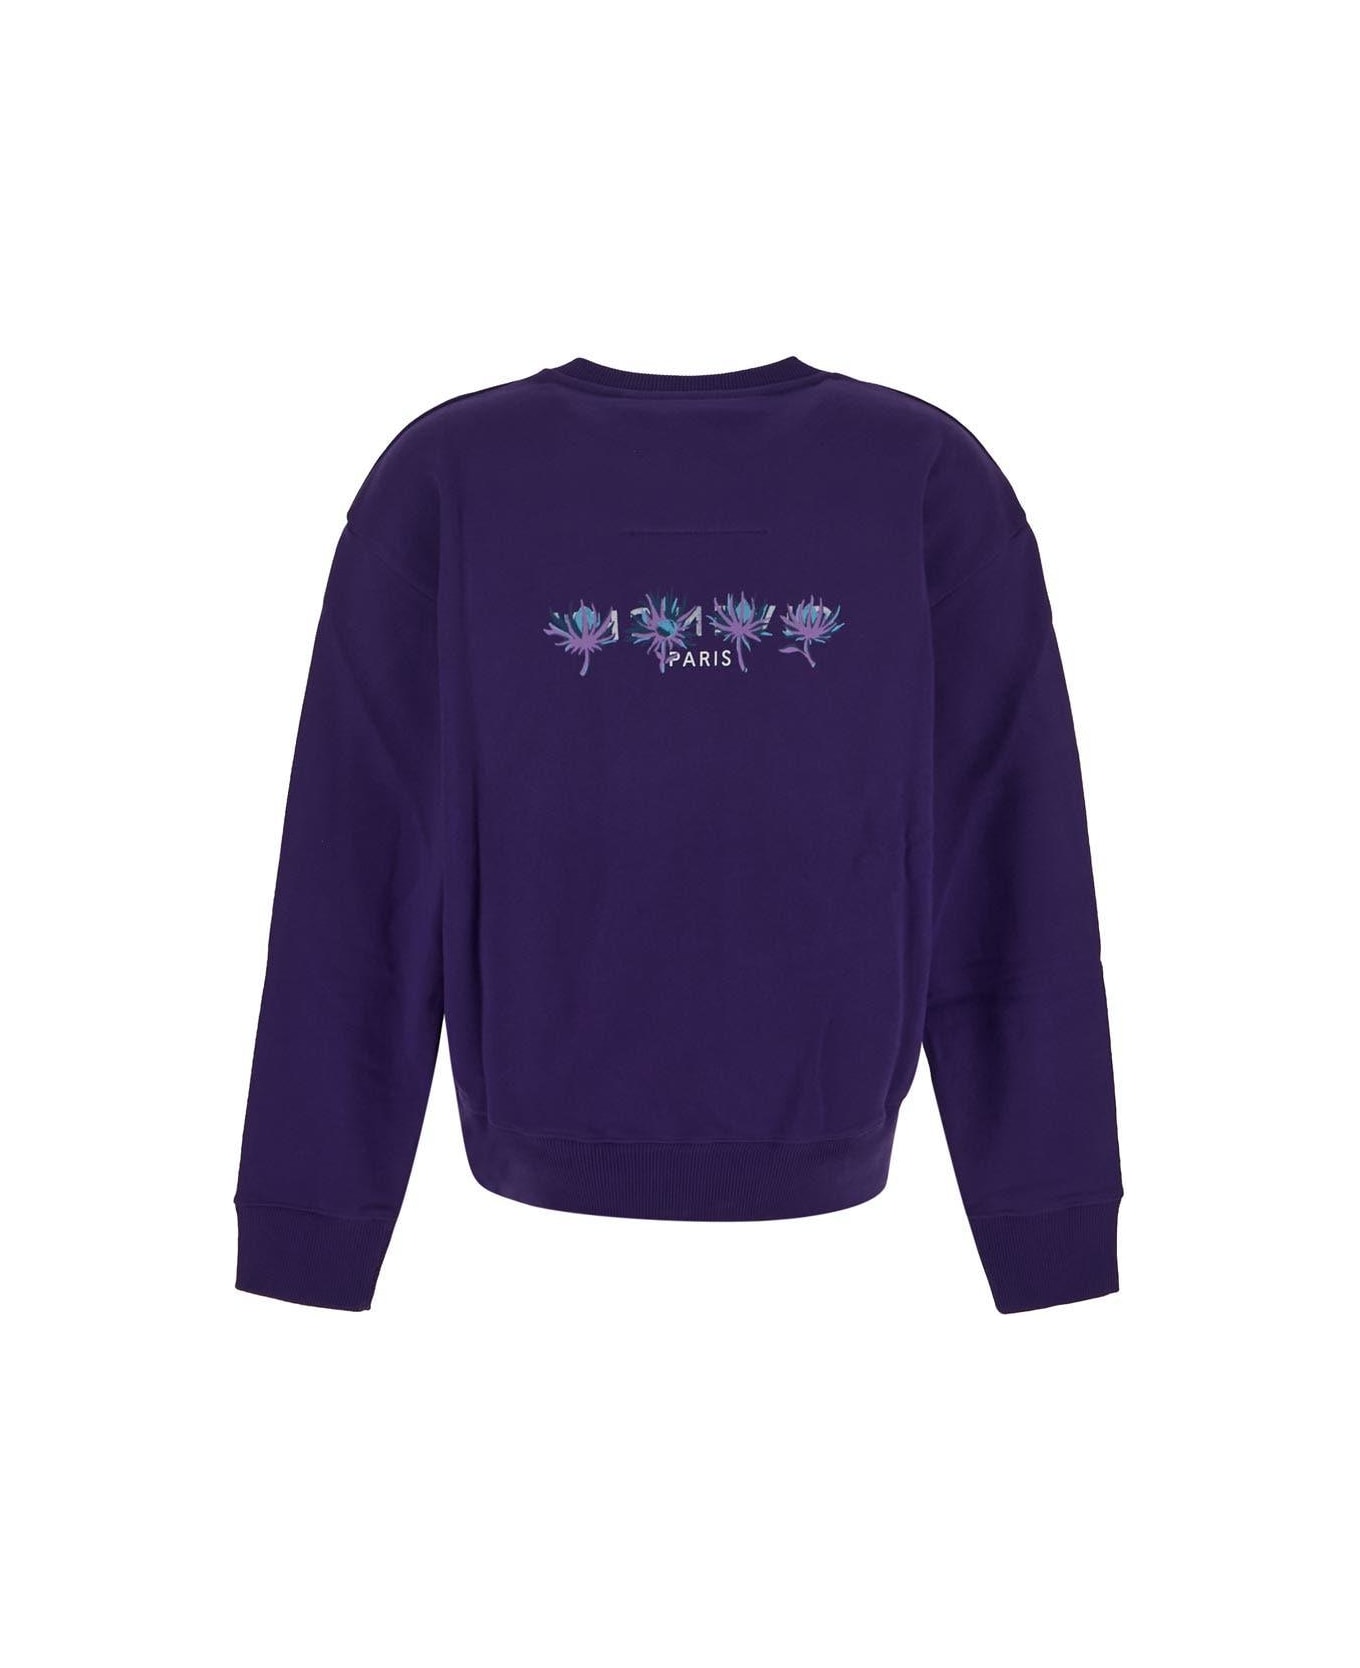 Givenchy Logo Print Sweatshirt